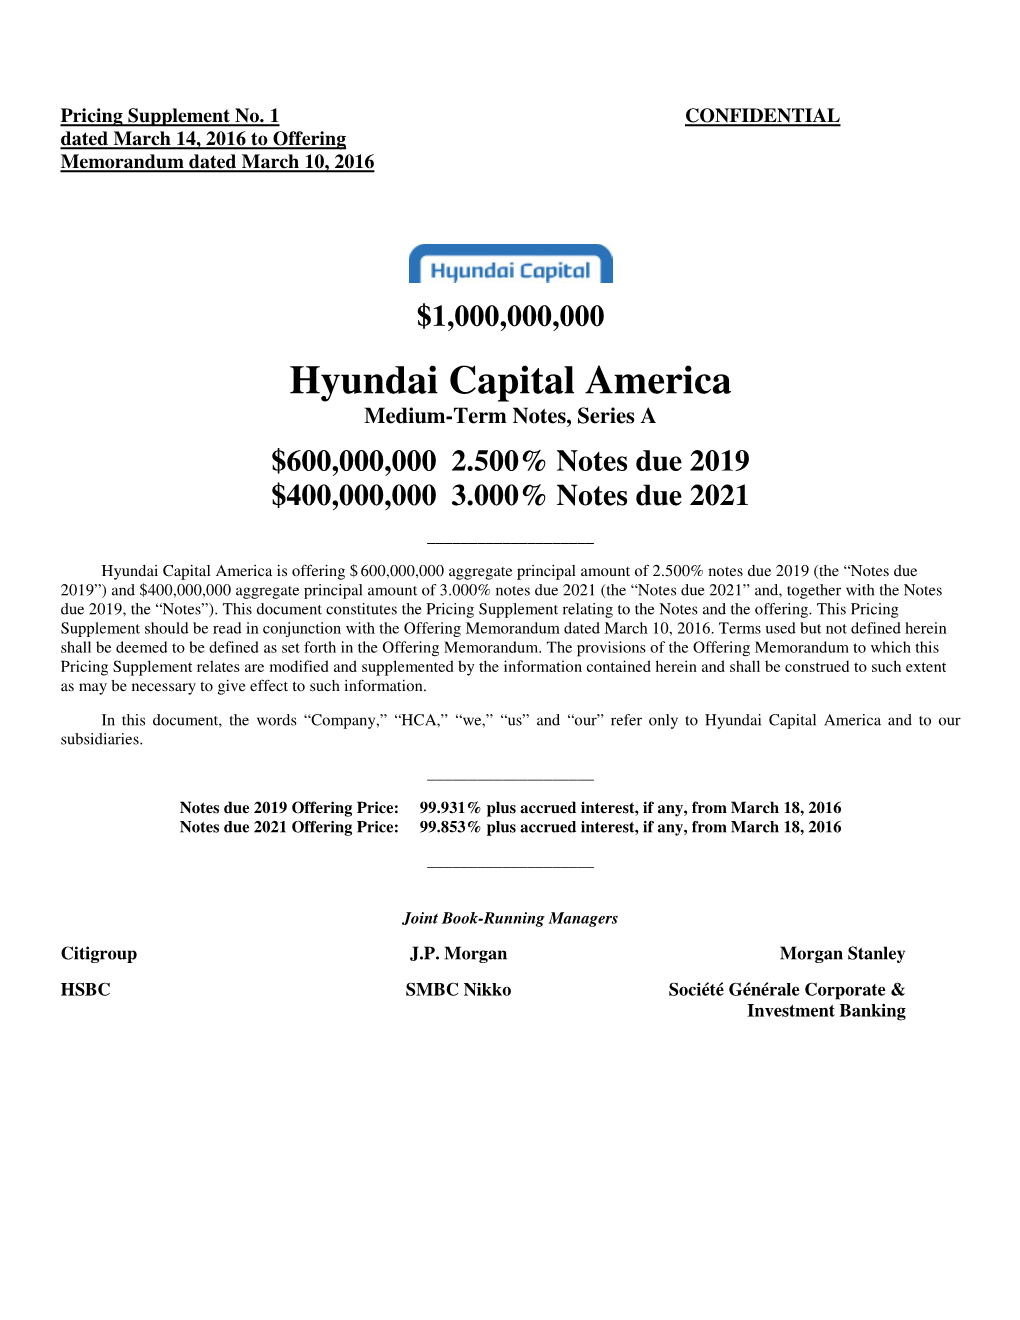 Hyundai Capital America Medium-Term Notes, Series A